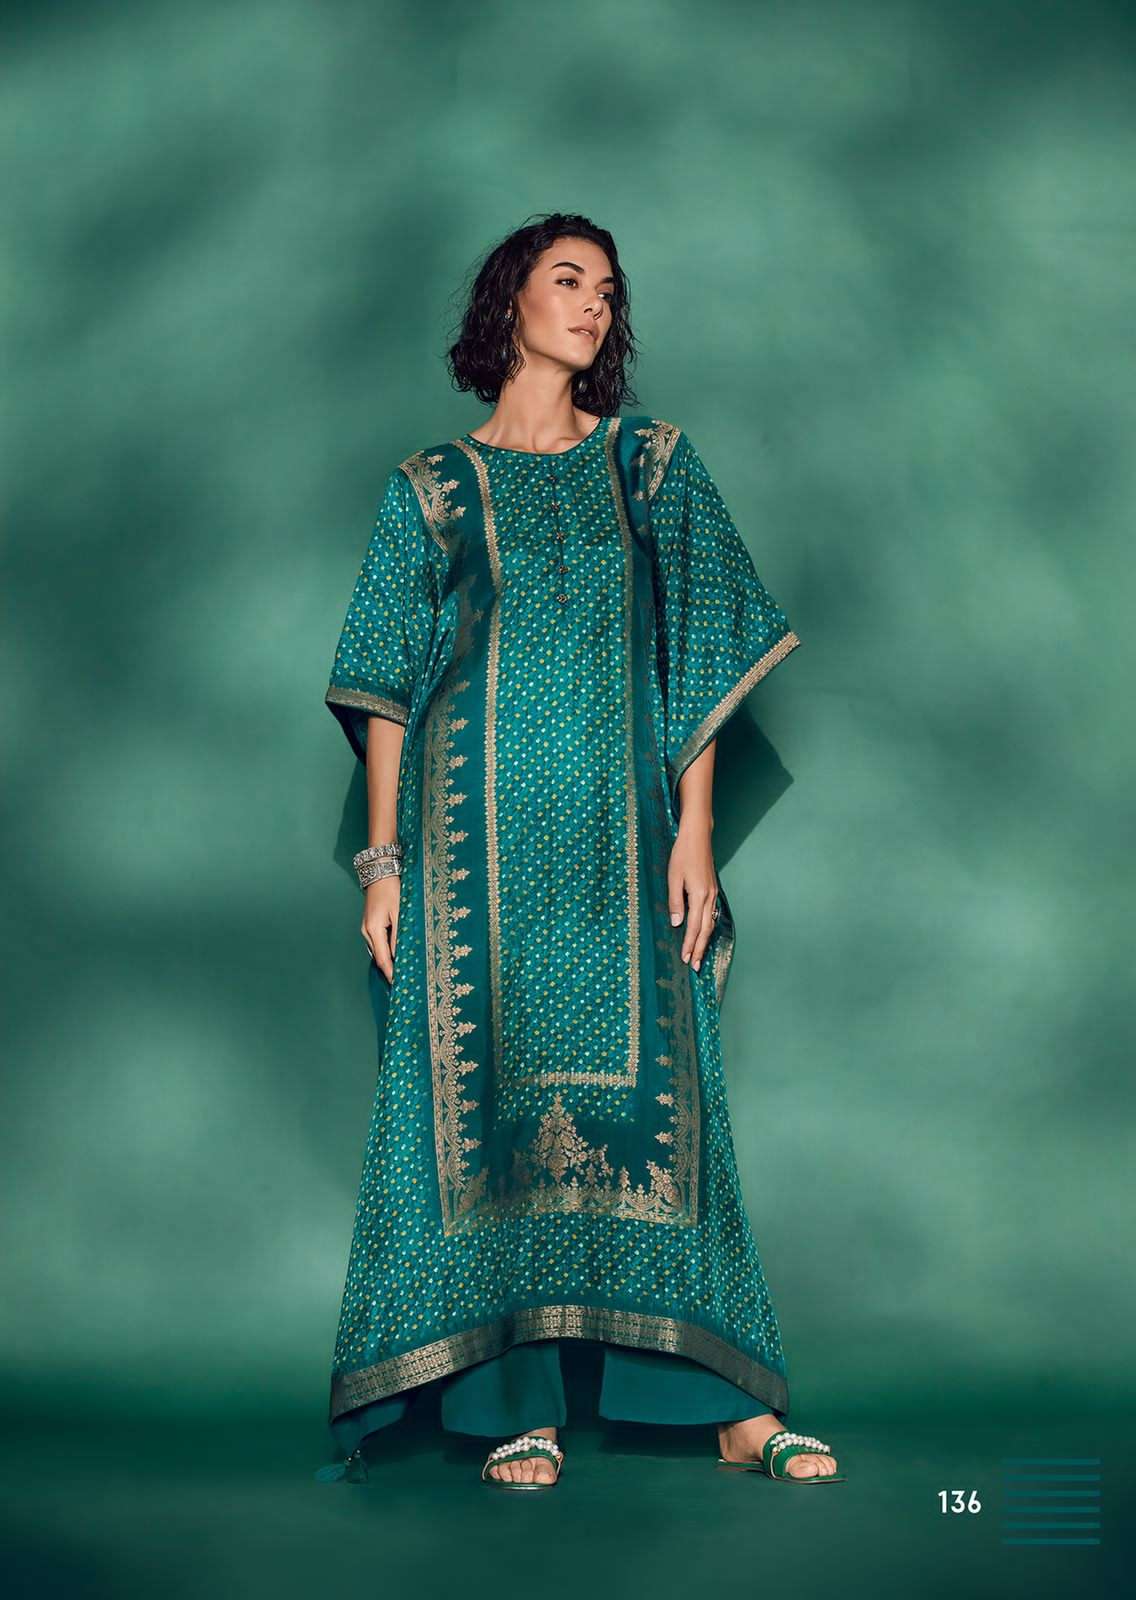 varsha fashion maanvi 134-136 series stylish designer salwar kameez manufacturer surat 